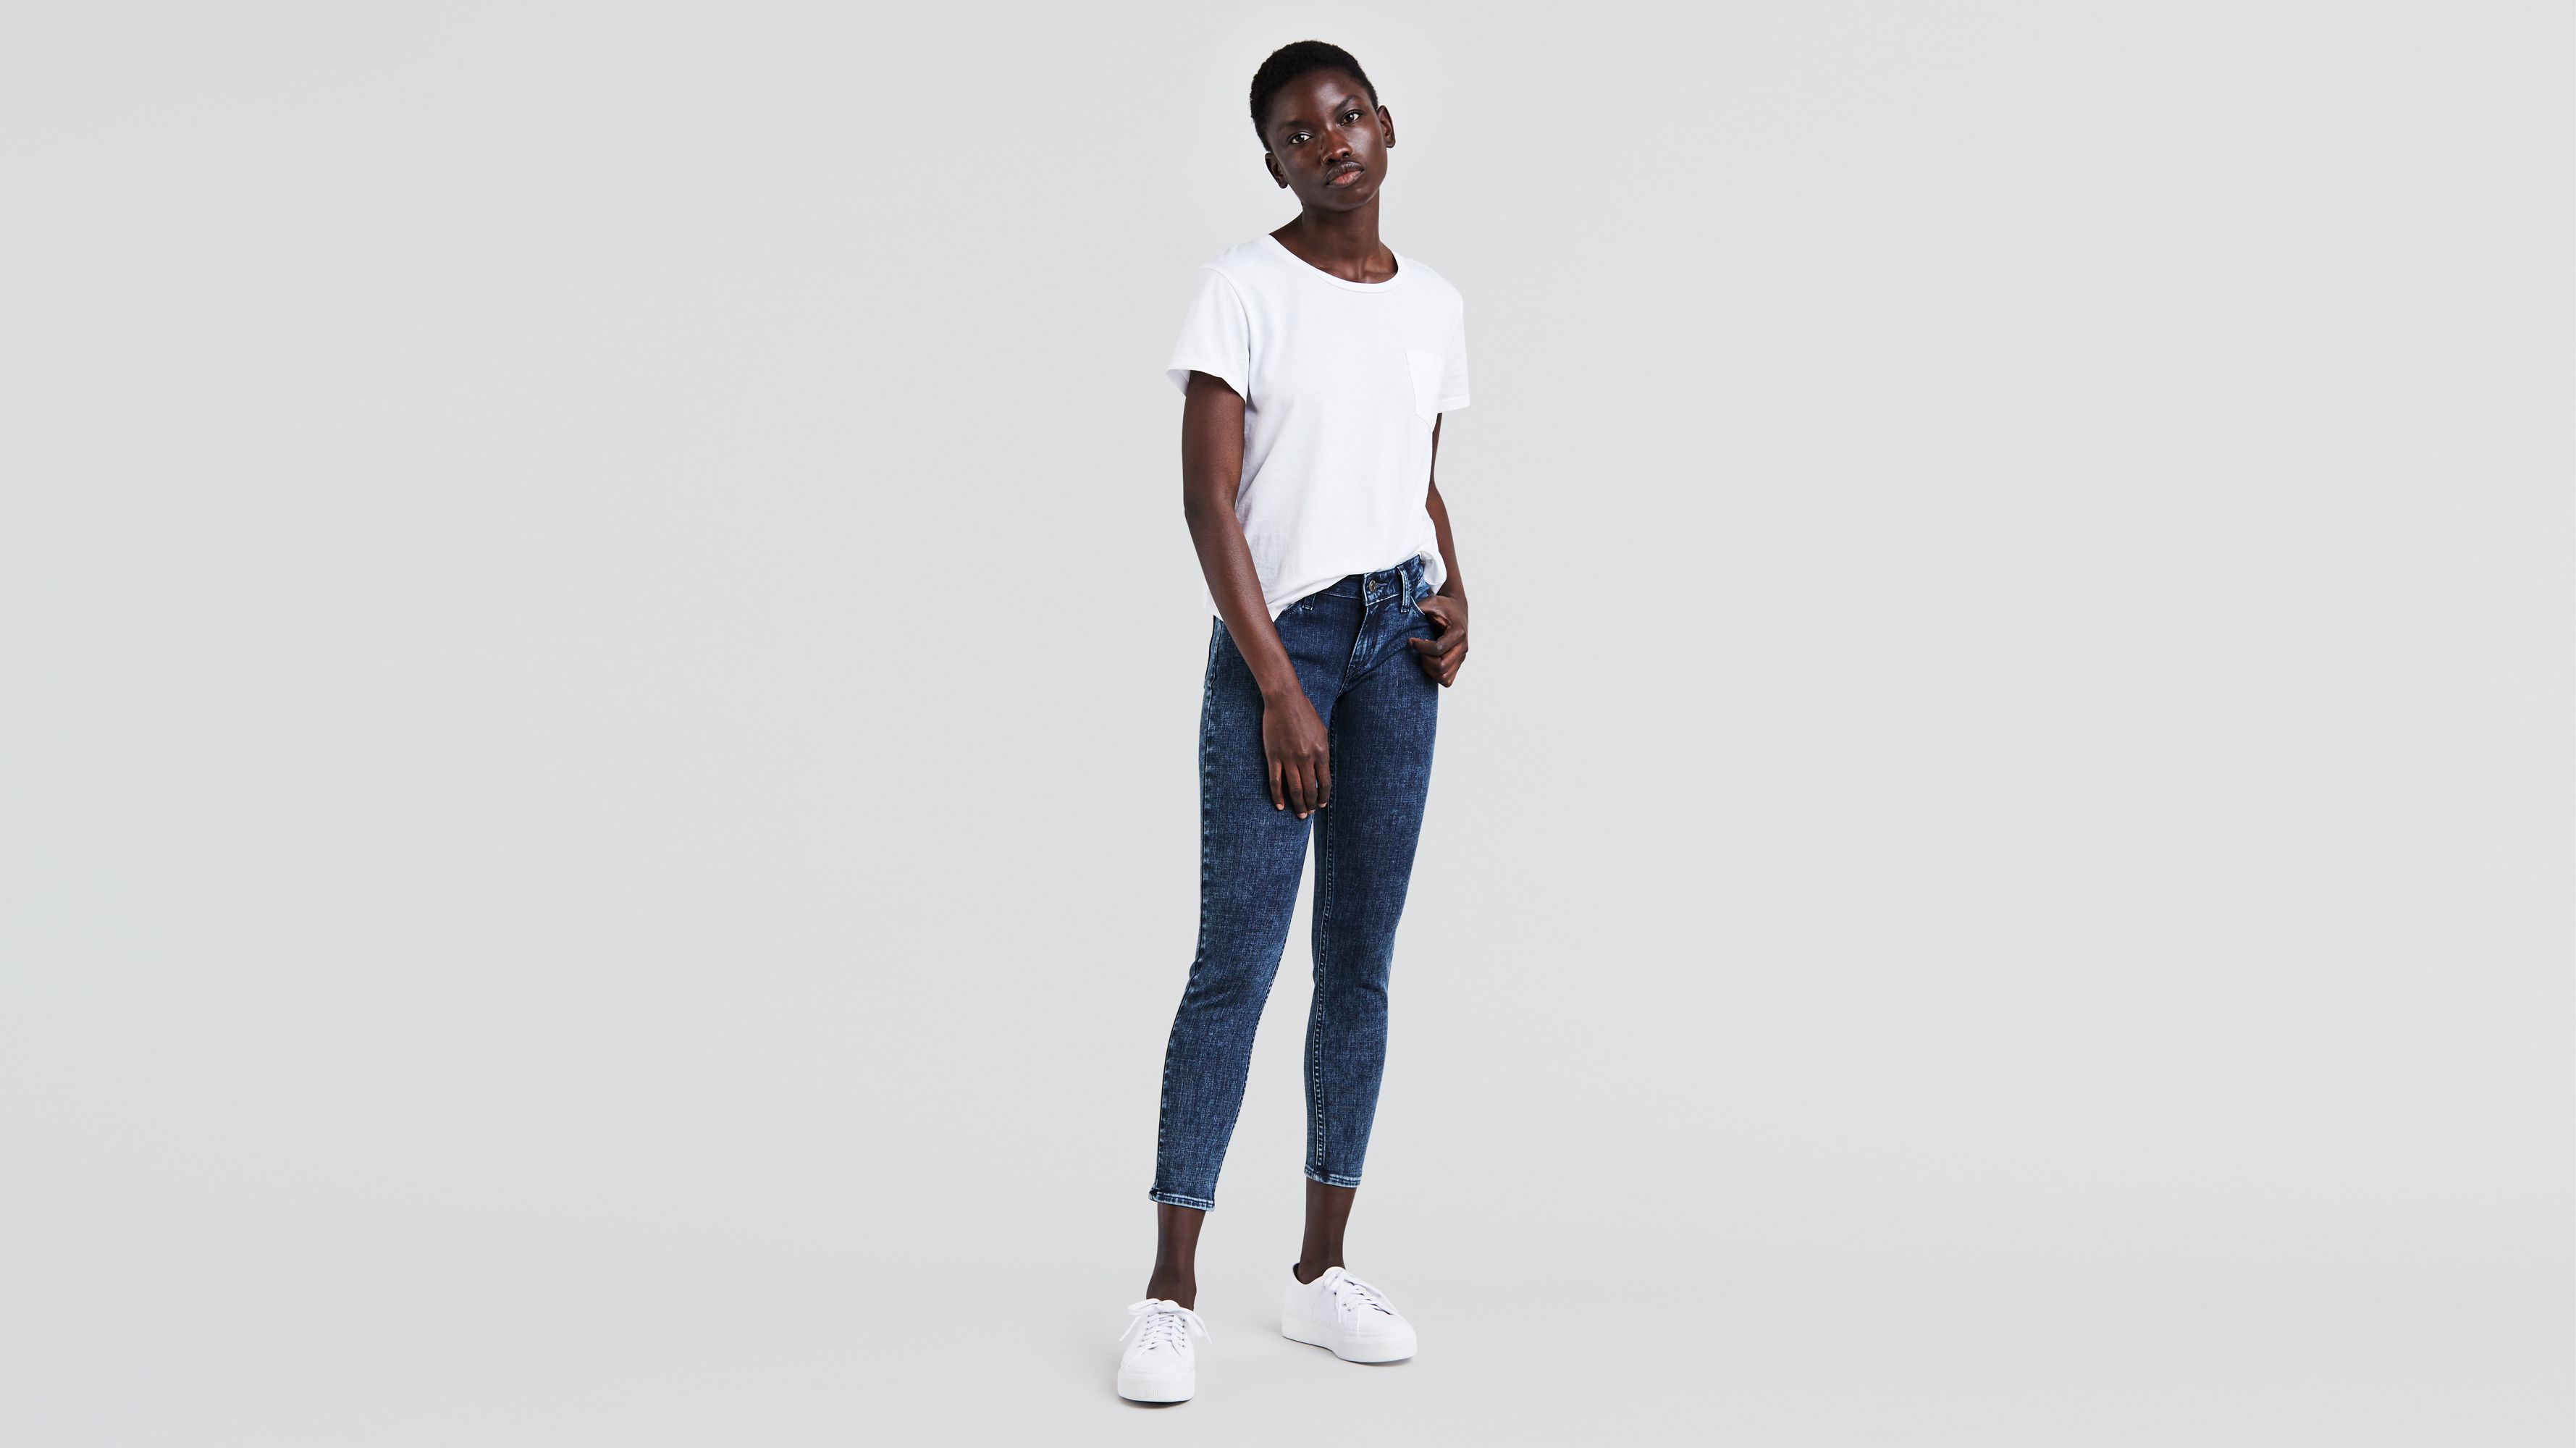 535 Super Skinny Women's Jeans - Dark Wash | Levi's® US